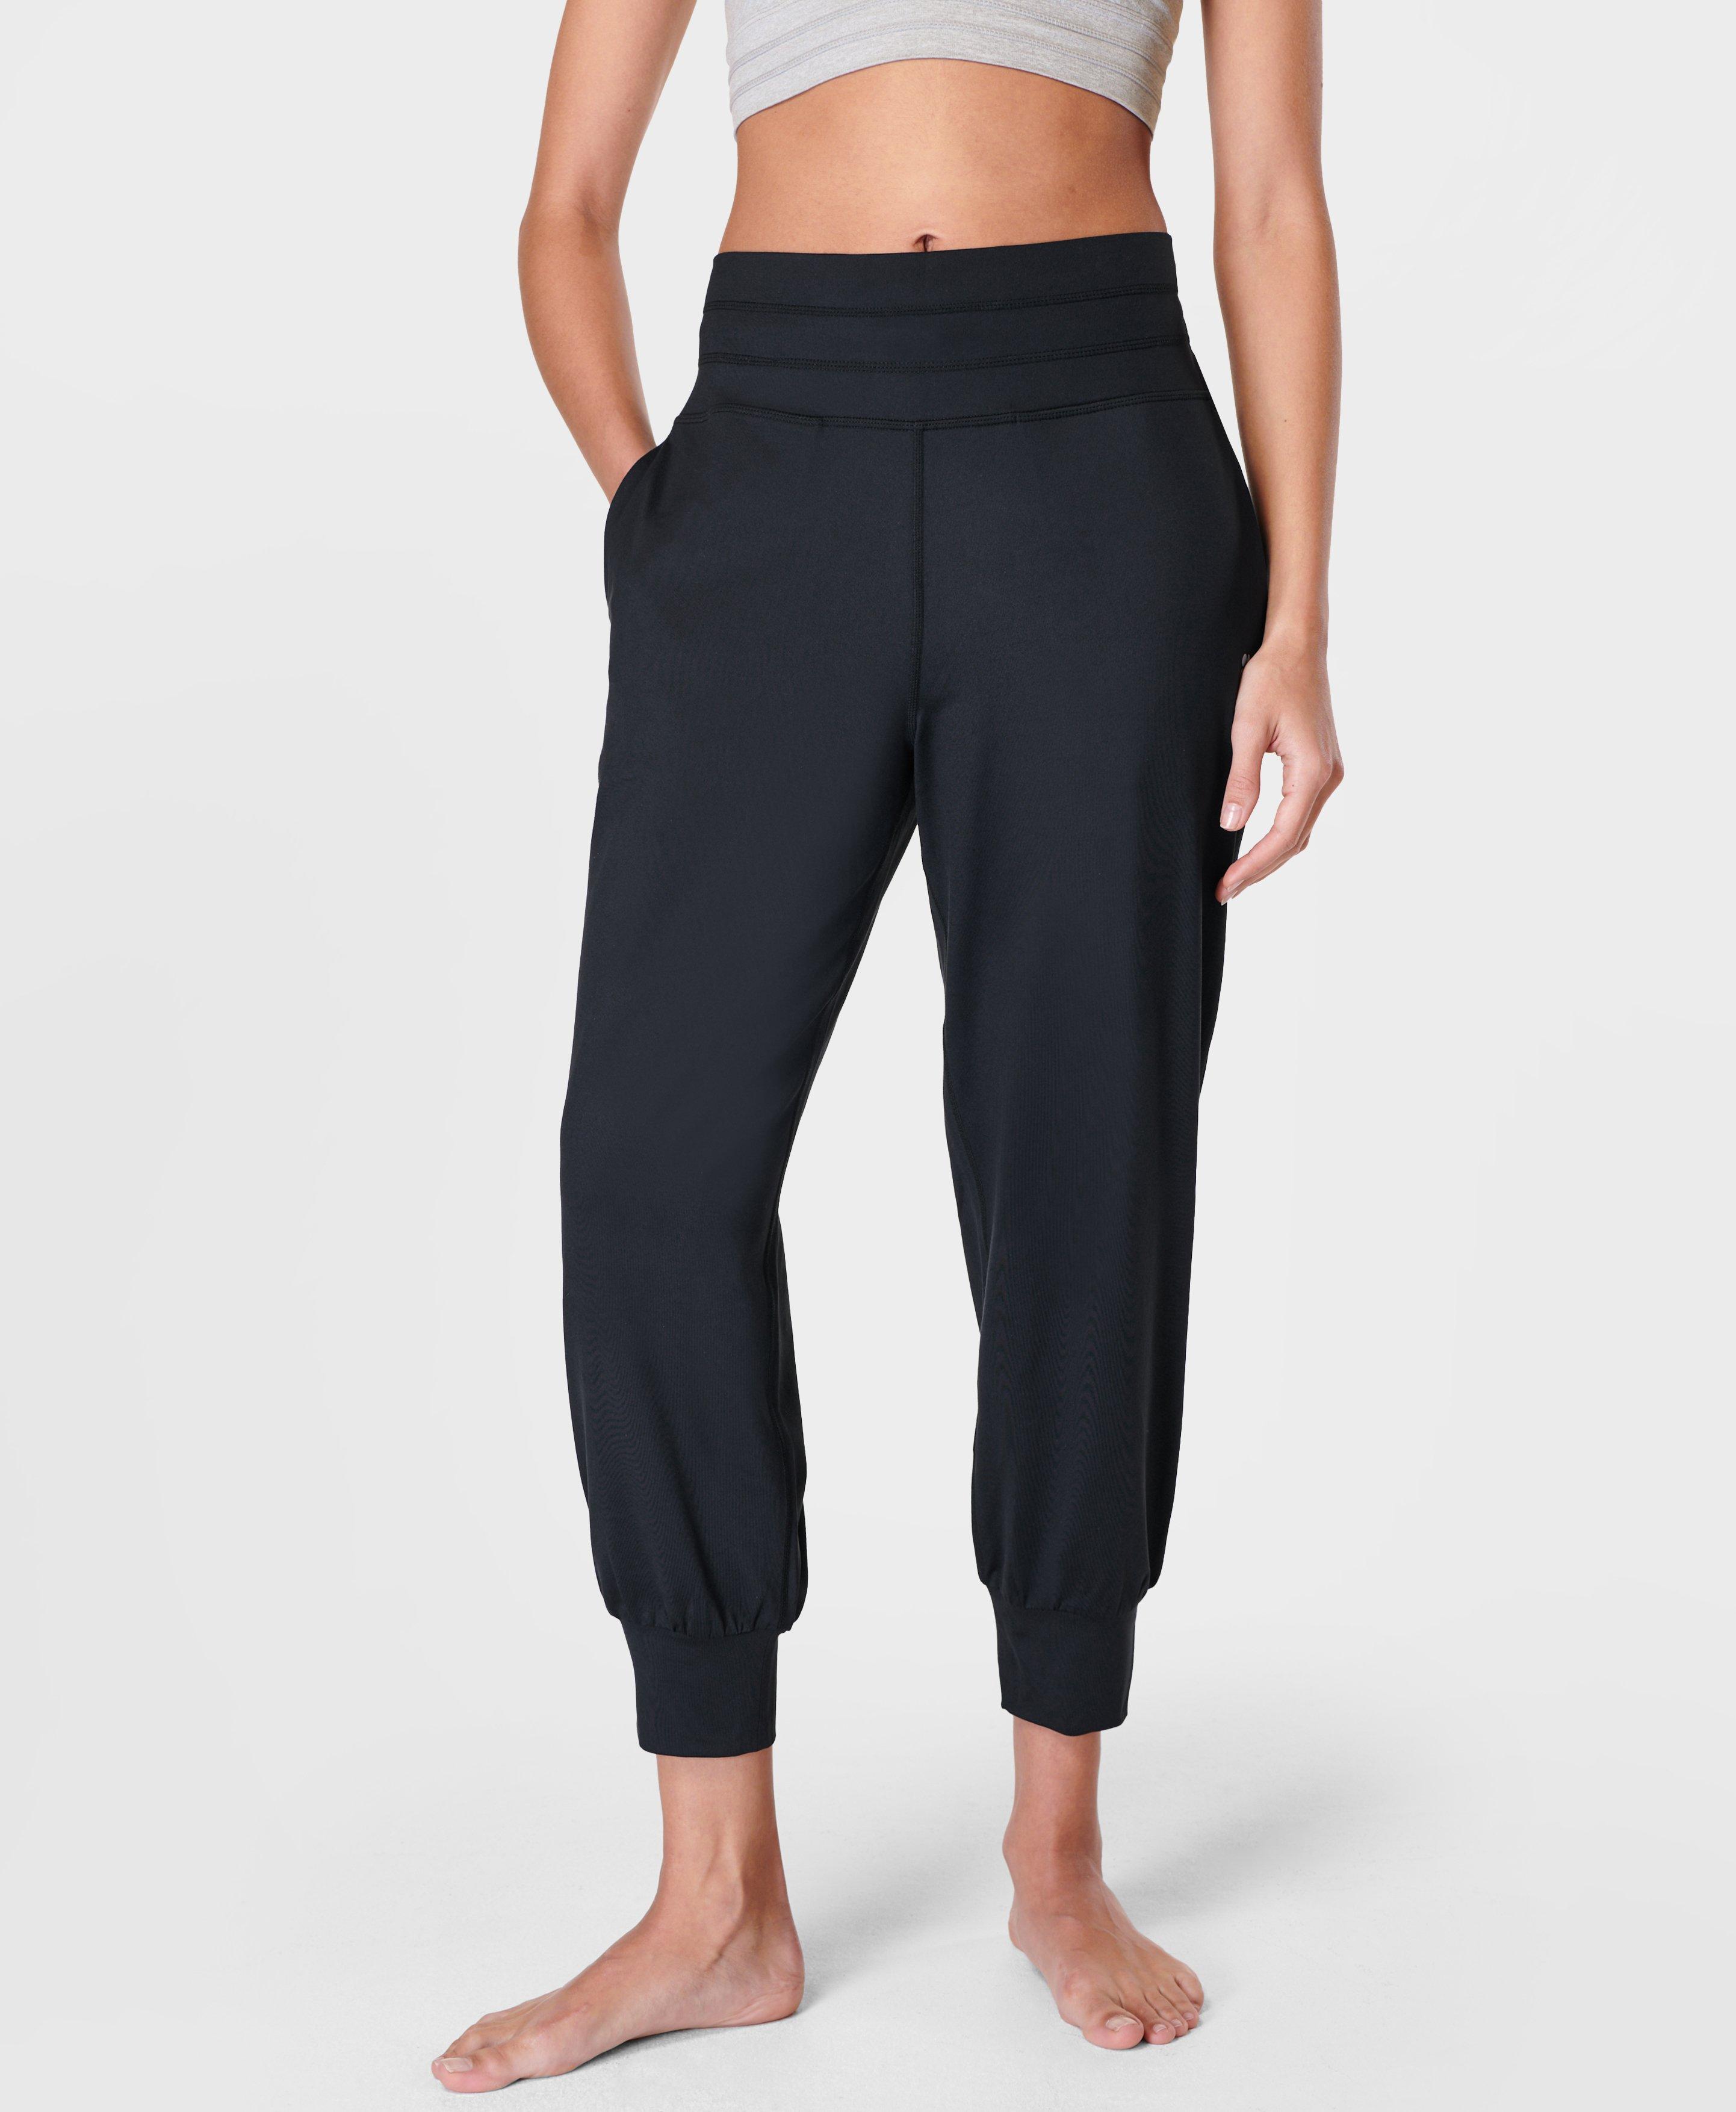 ToBeInStyle Women's Comfy Capri Yoga Pants with Criss-Cross Design